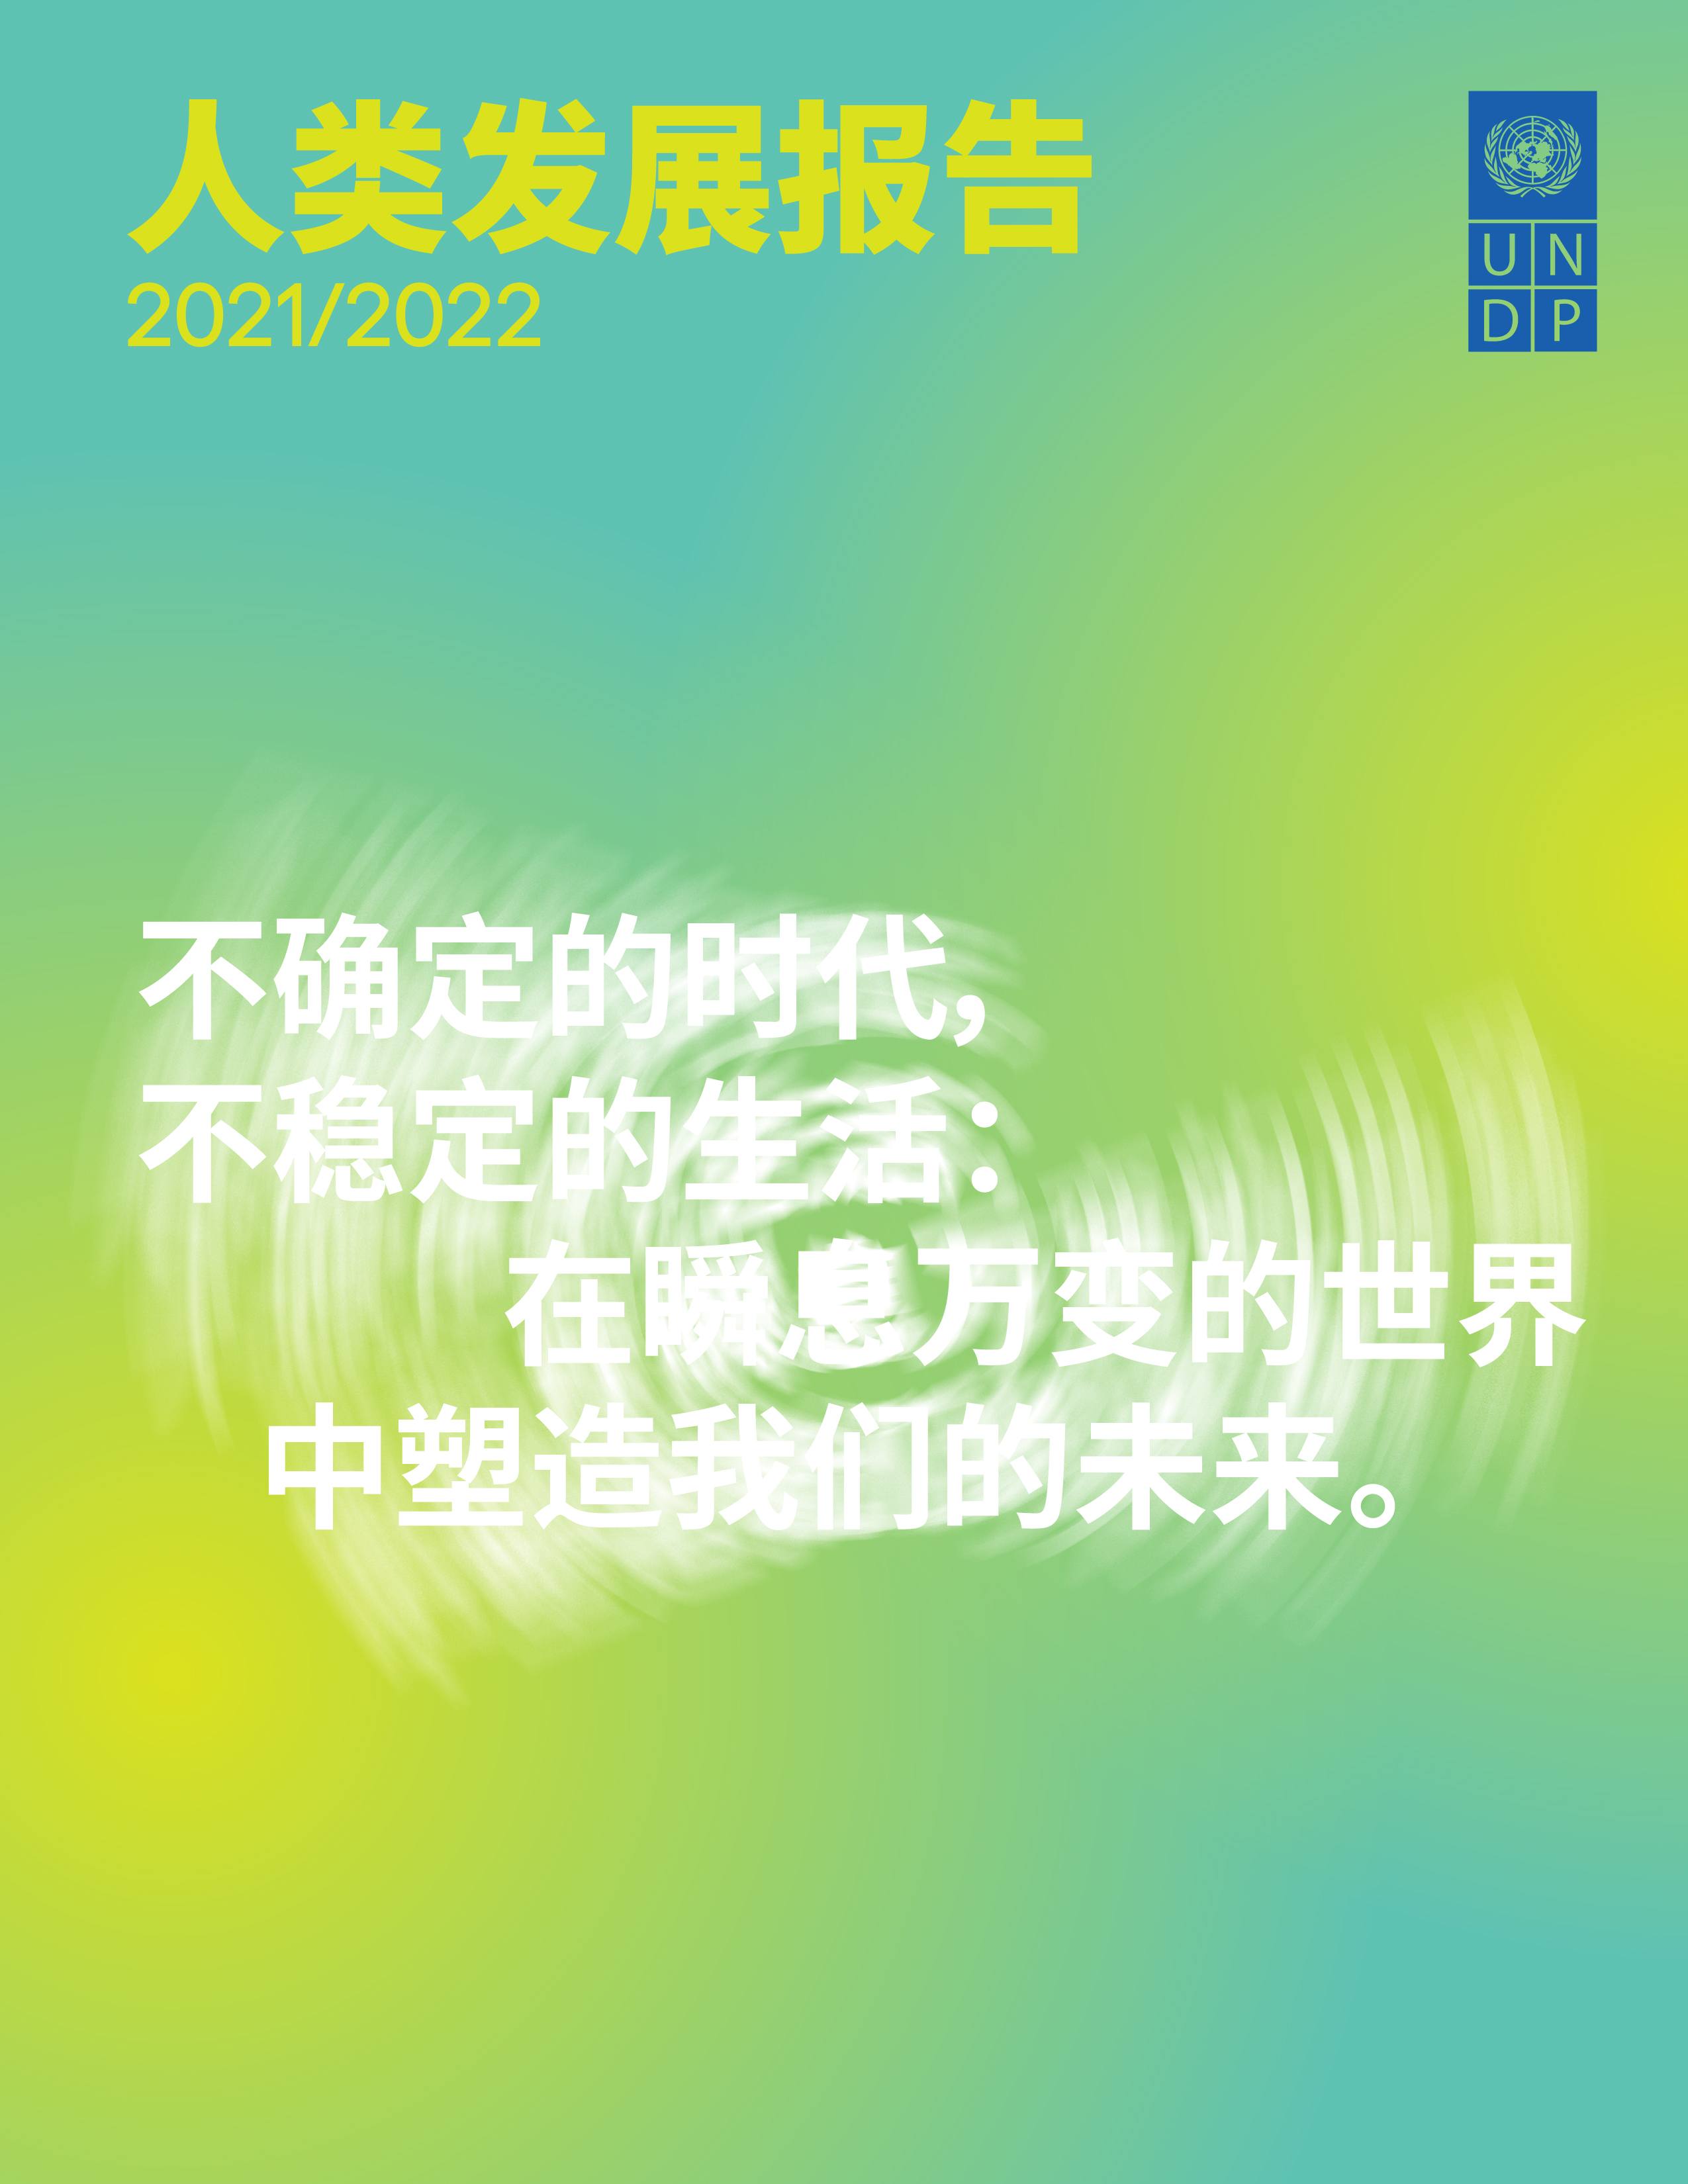 image of 人类发展报告 2021/2022